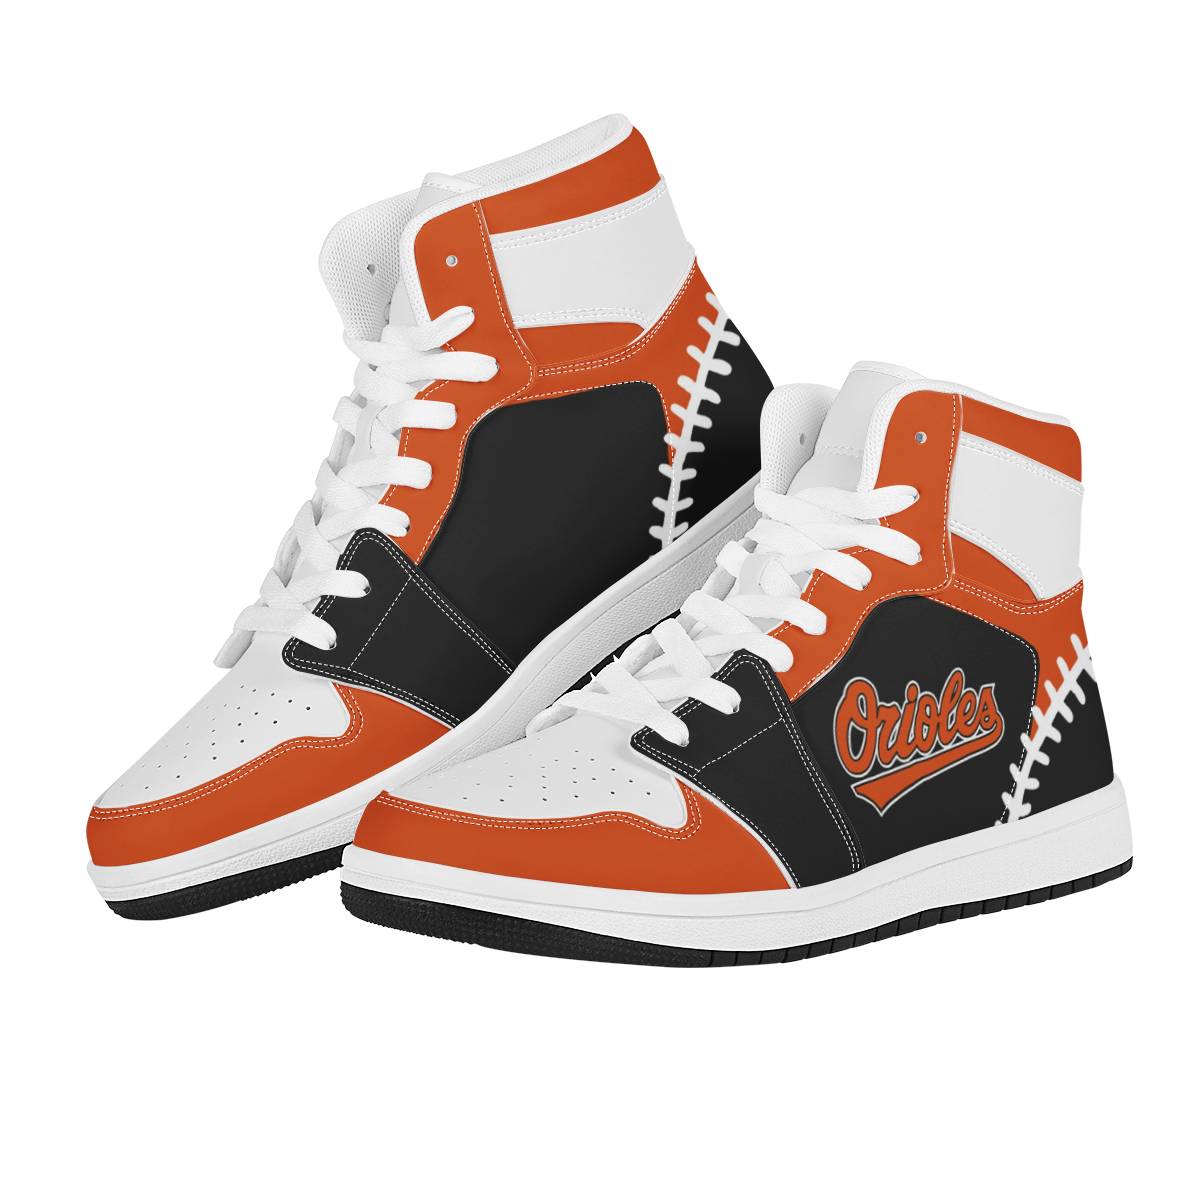 Men's Baltimore Orioles High Top Leather AJ1 Sneakers 003